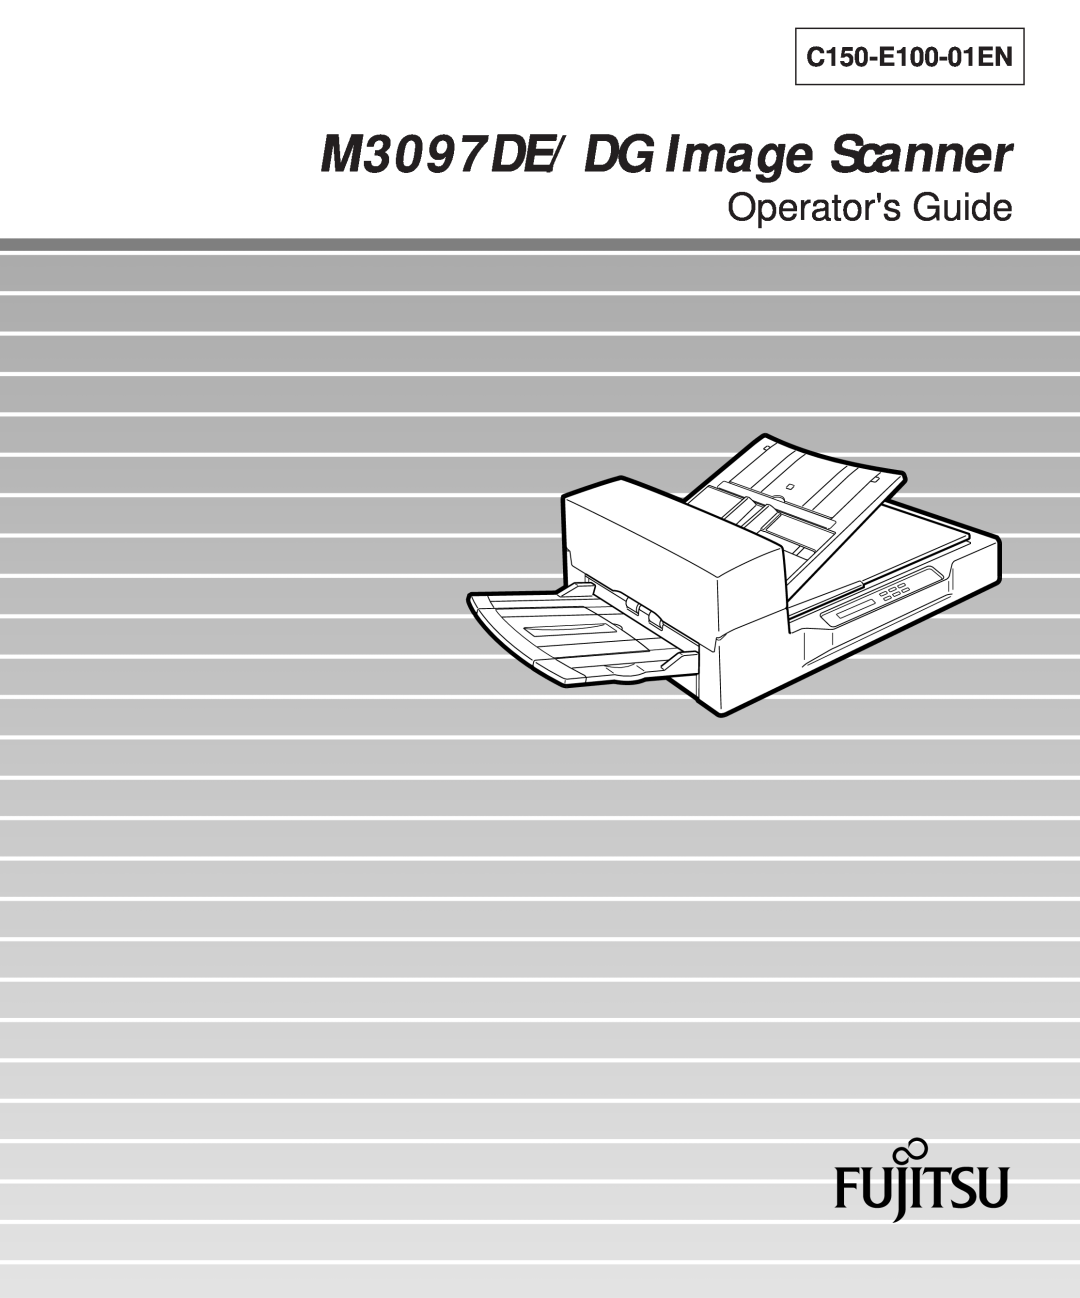 Fujitsu M3097DG manual M3097DE/DG Image Scanner, Operators Guide, C150-E100-01EN 